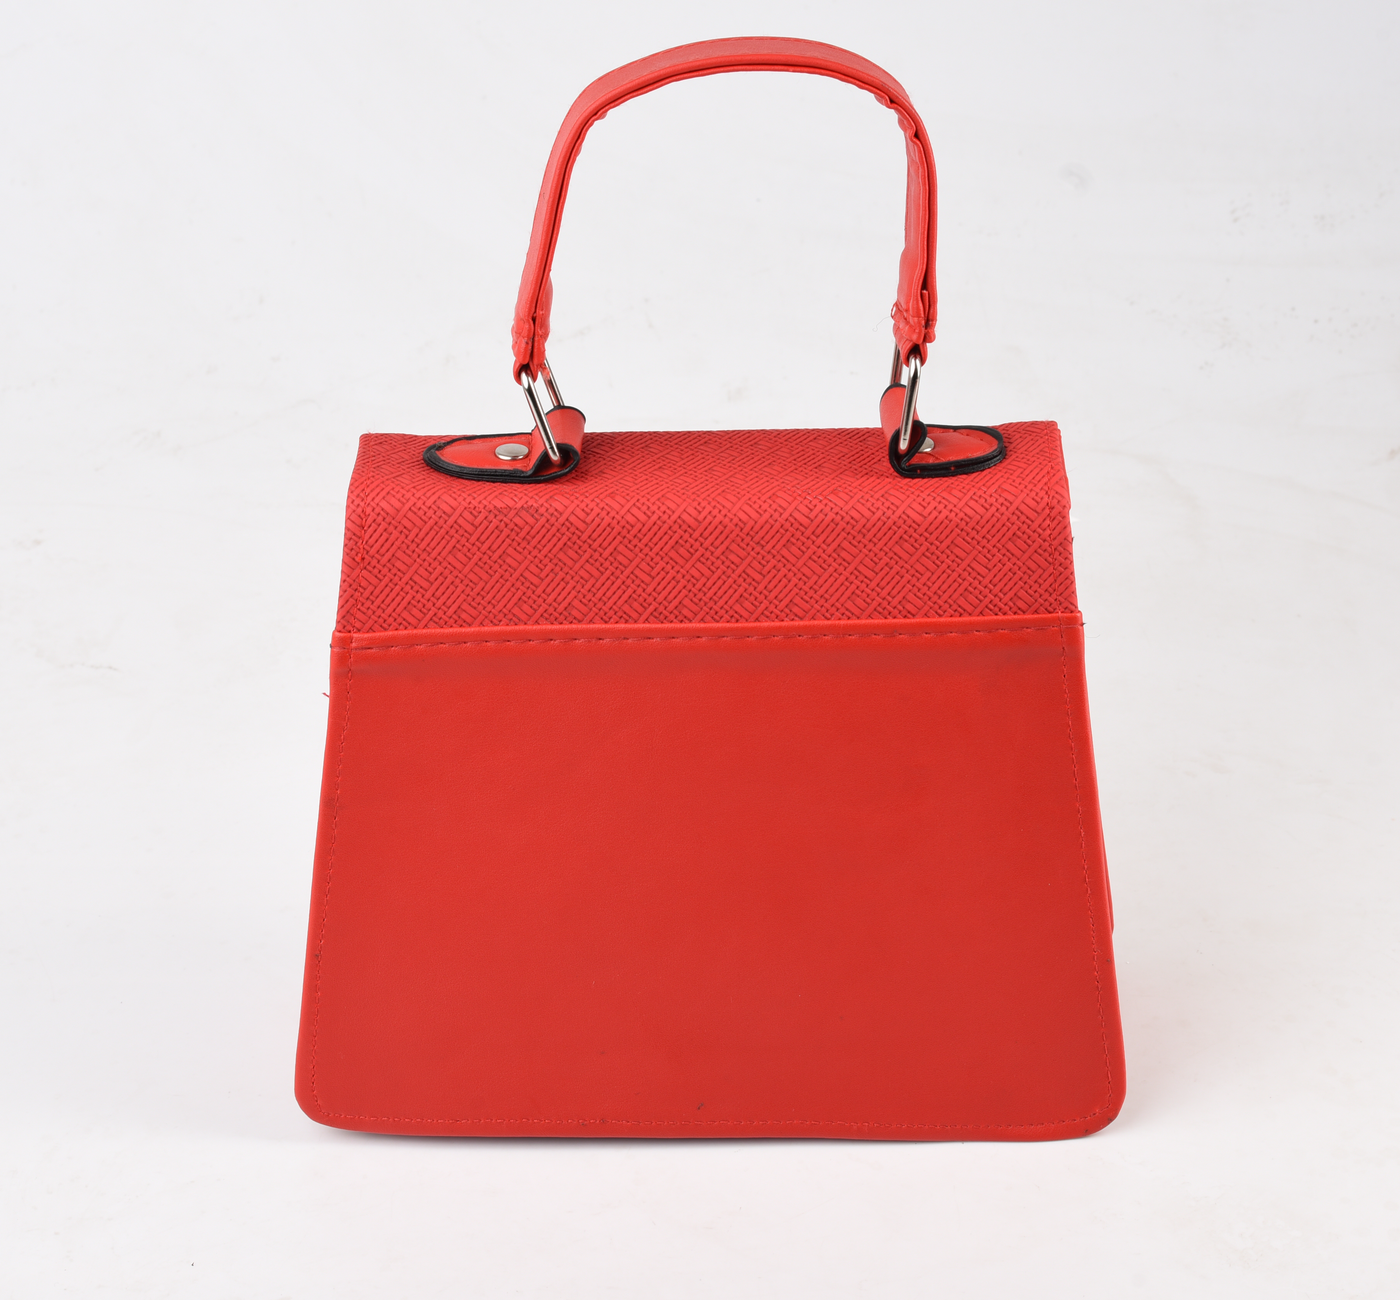 Ana Pattern Red Tote Bag